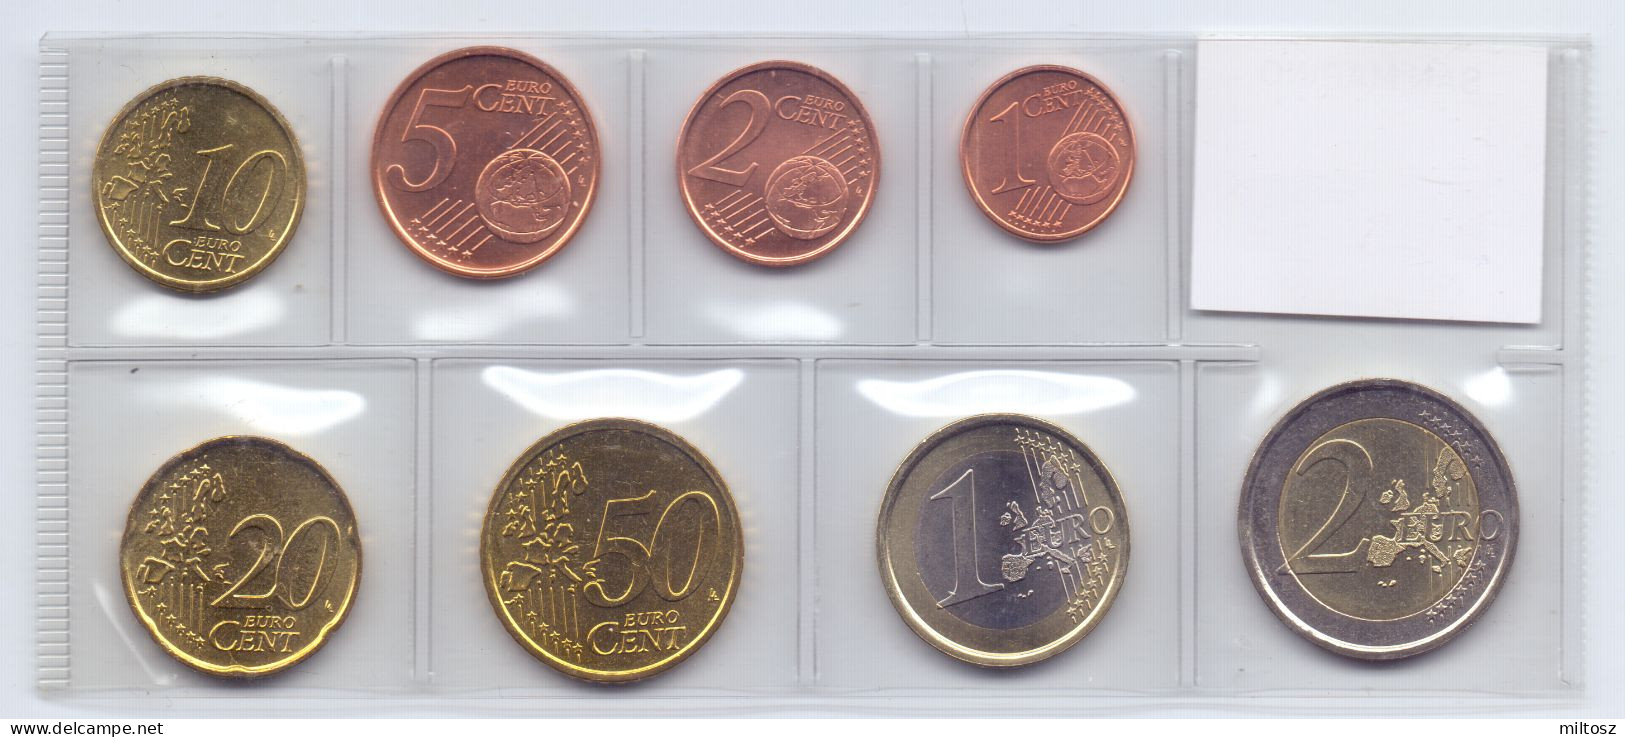 San Marino 7 Euro Coins Set - San Marino